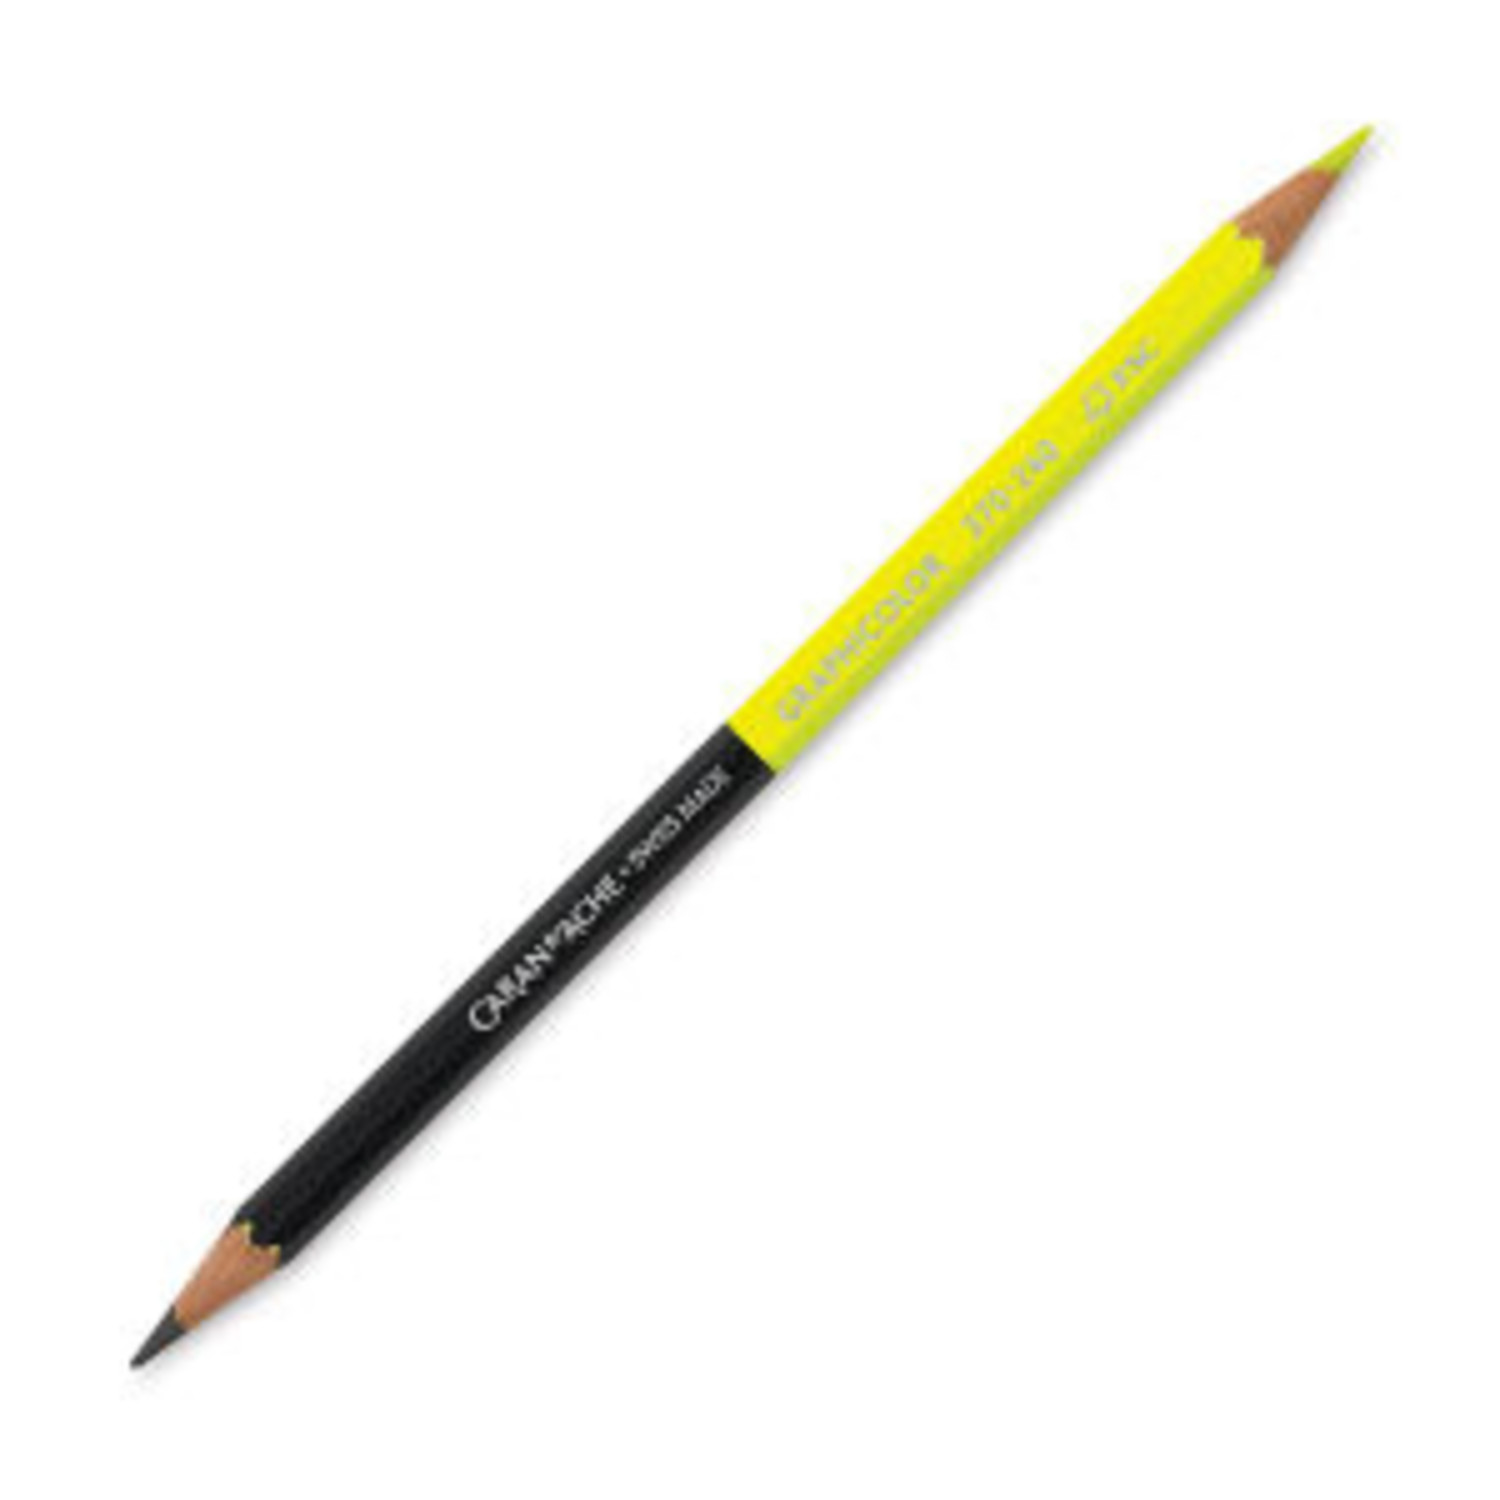 Caran d'Ache Graphite Pencils - Pack of 4